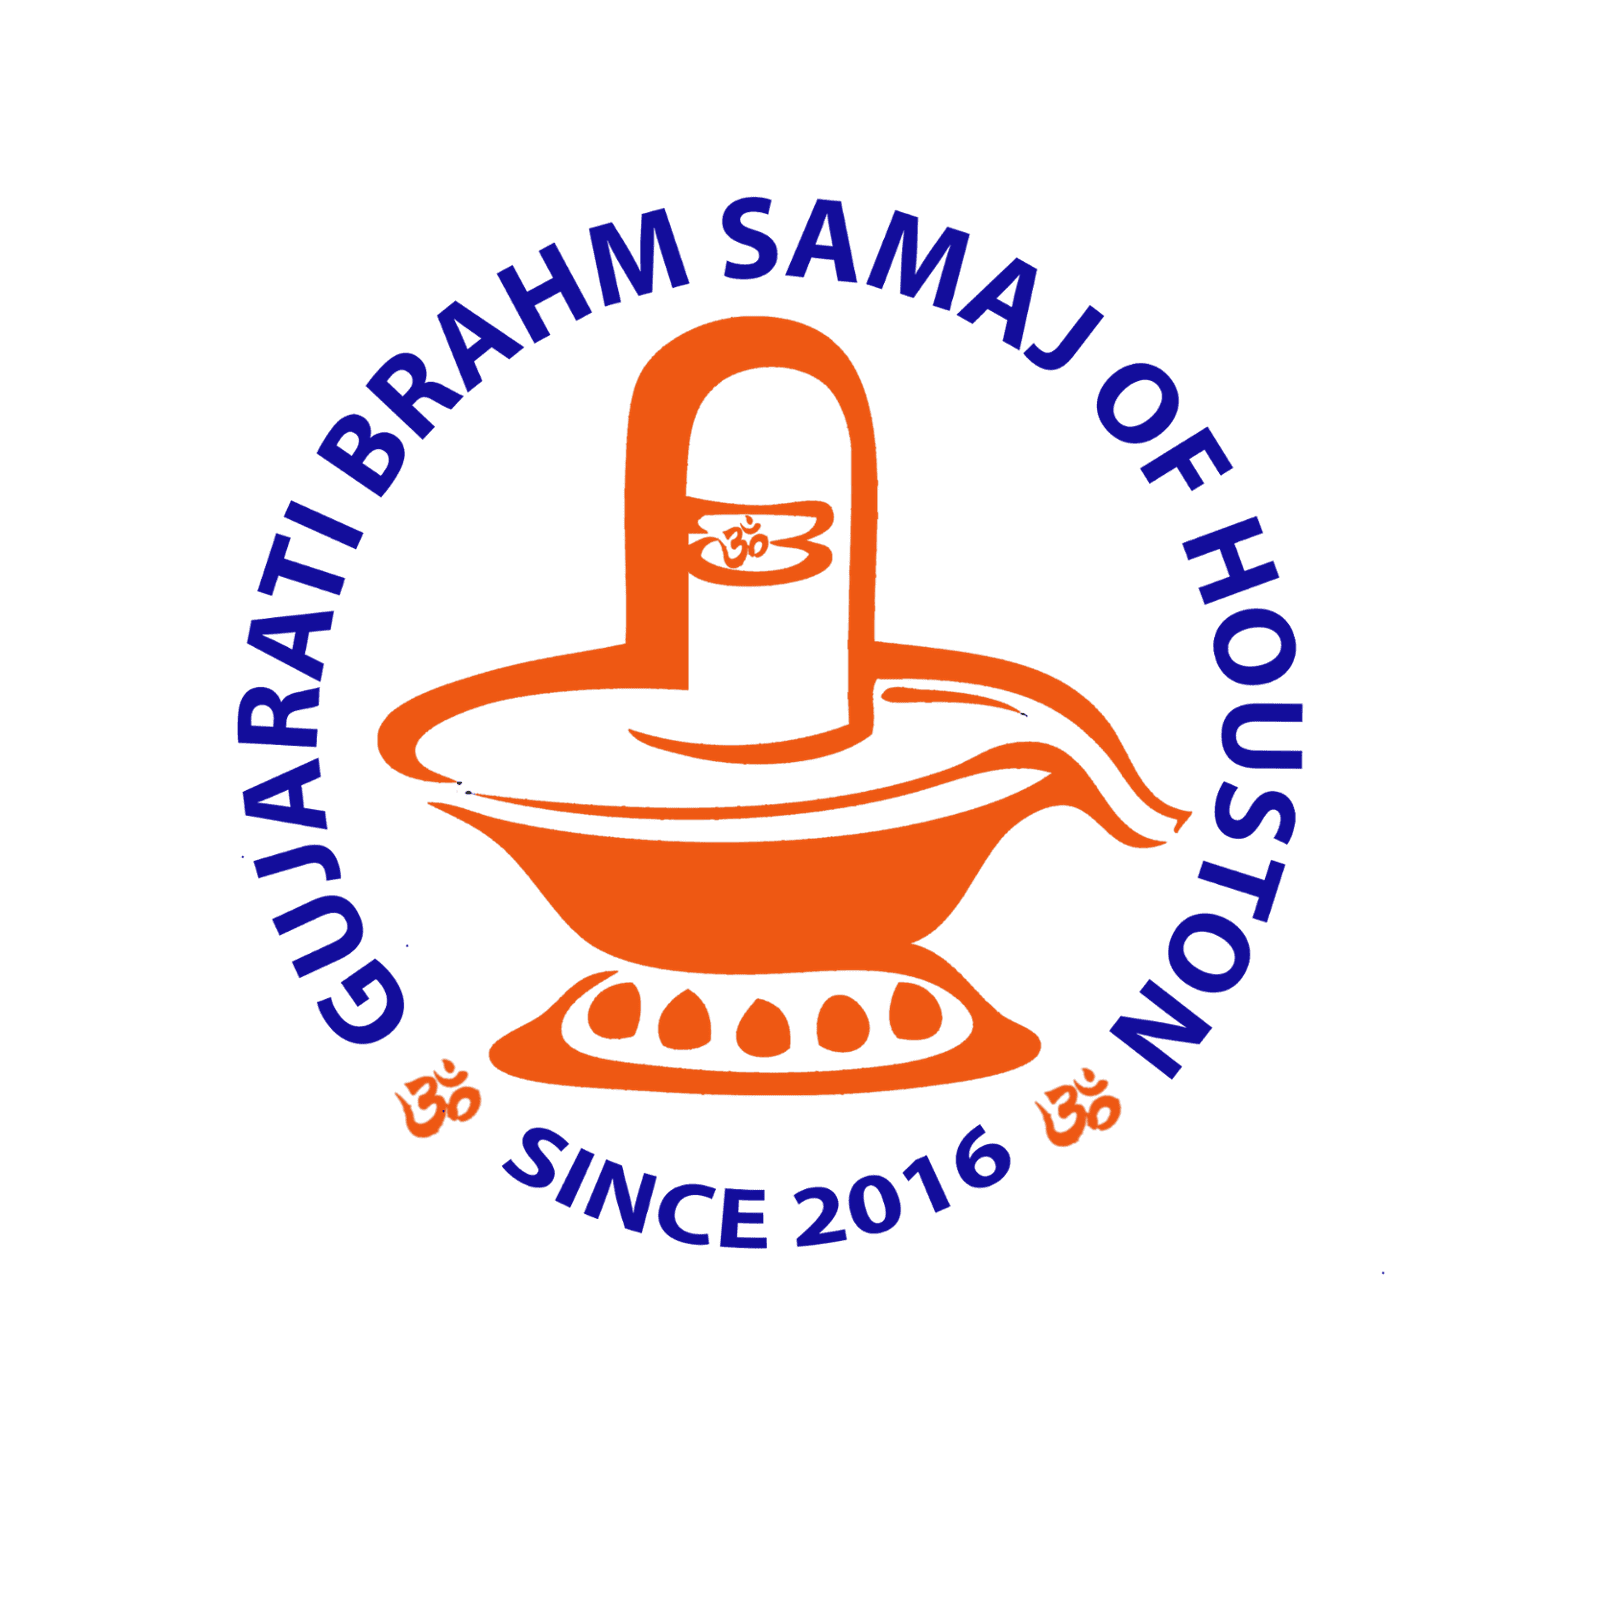 Gujarati Brahm Samaj of Houston